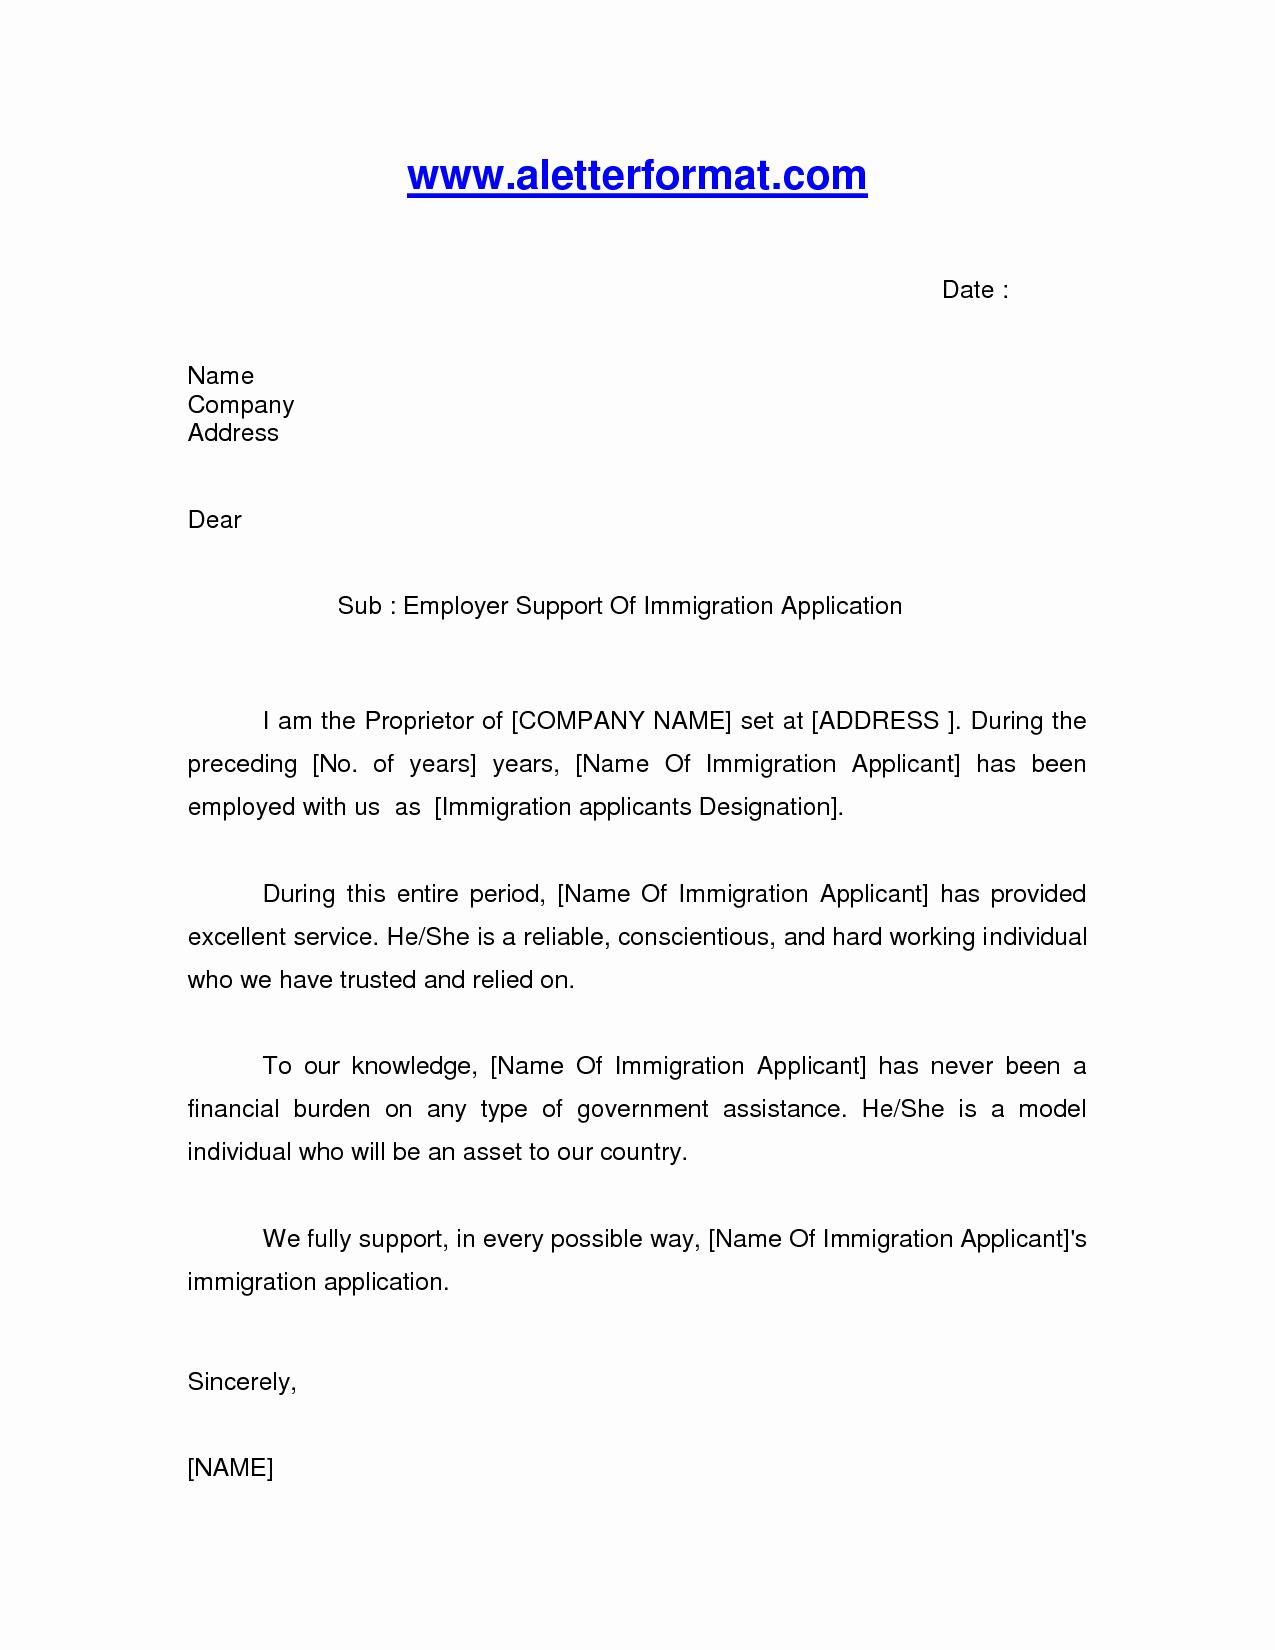 Immigration Letter Of Support Sample Lovely Immigration Letter Sample Google Search